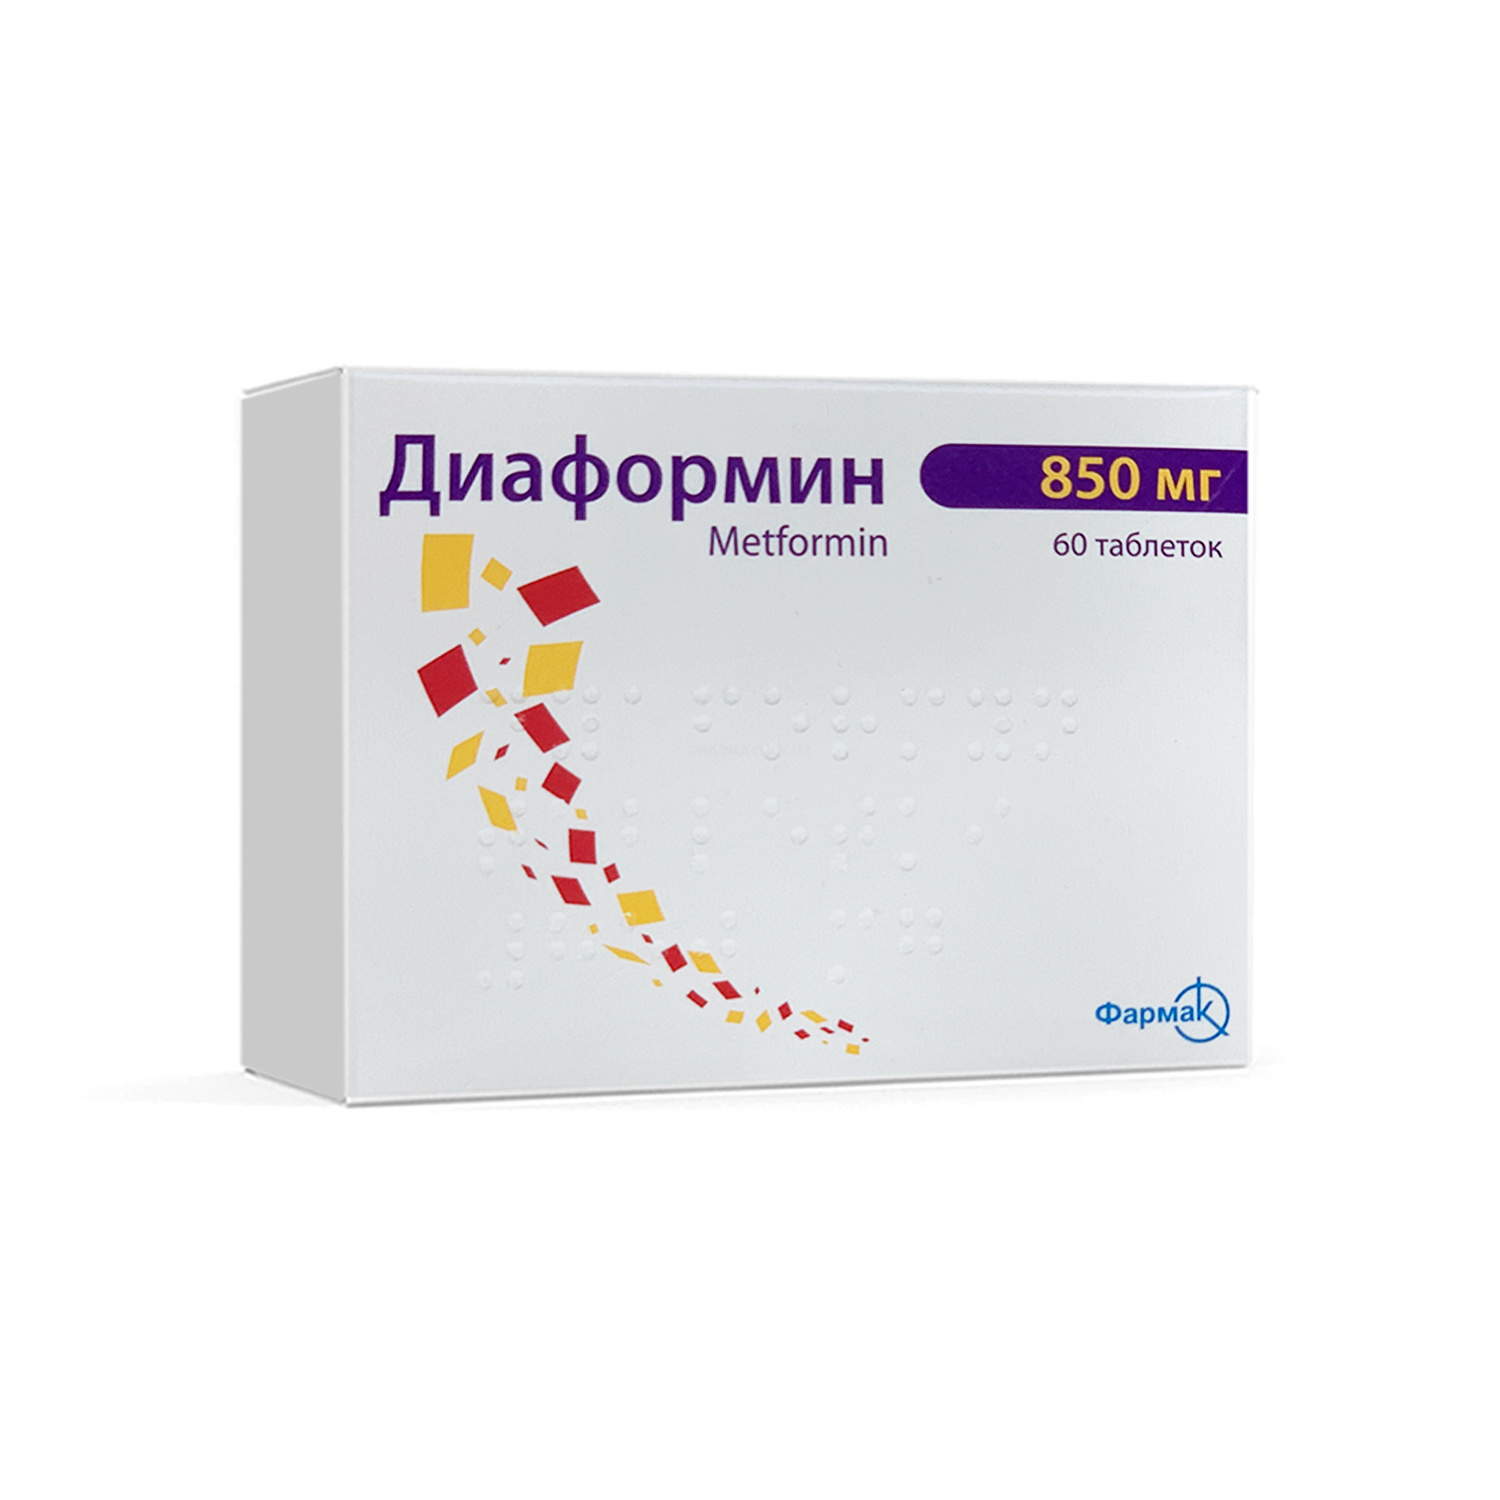 Diaformin tab.850 mg.№60